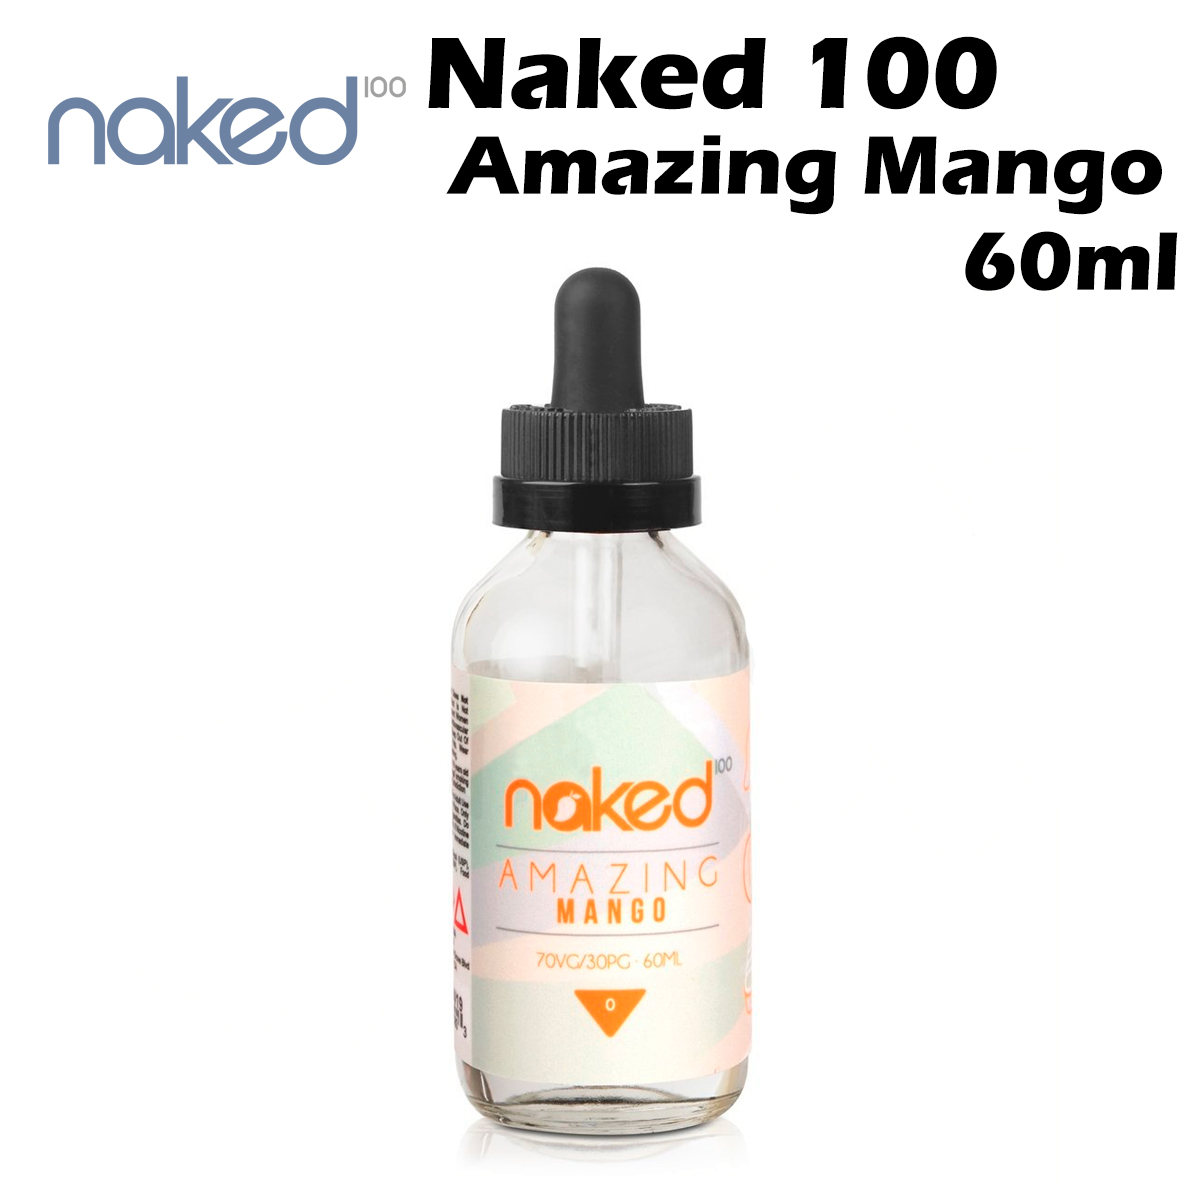 Naked 100 Amazing Mango 60ml マンゴ ピーチ クリーム アメリカ産 リキッド 電子タバコ 電子たばこ ベイプ ネイキッド  電子タバコ・ベイプ